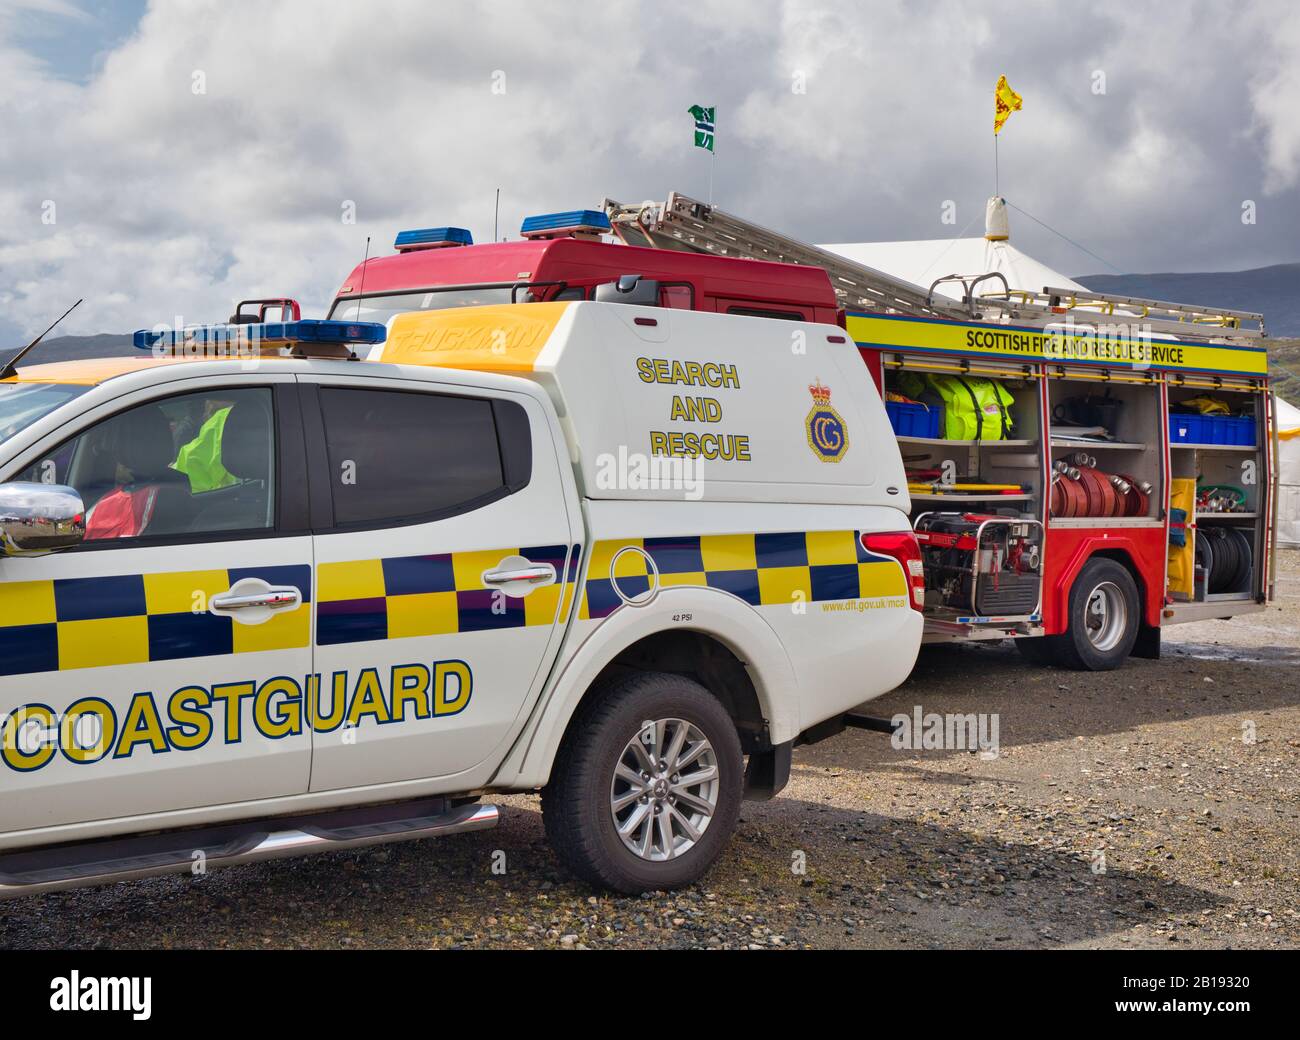 Scottish fire and rescue service fire engine and Scottish coastguard vehicle, Tarbert, Isle of Harris, Outer Hebrides, Scotland Stock Photo